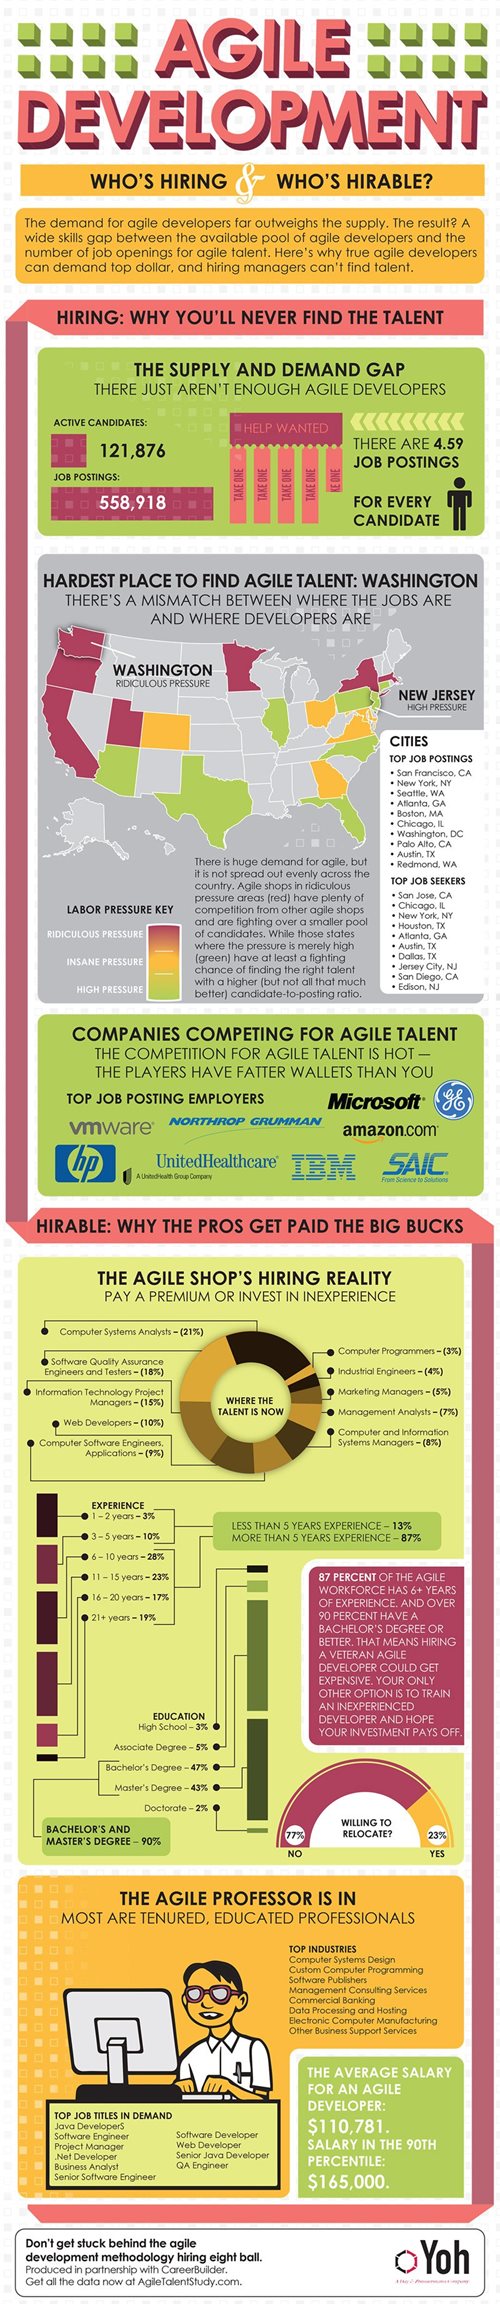 jobs-agile-developers-infographic.jpg